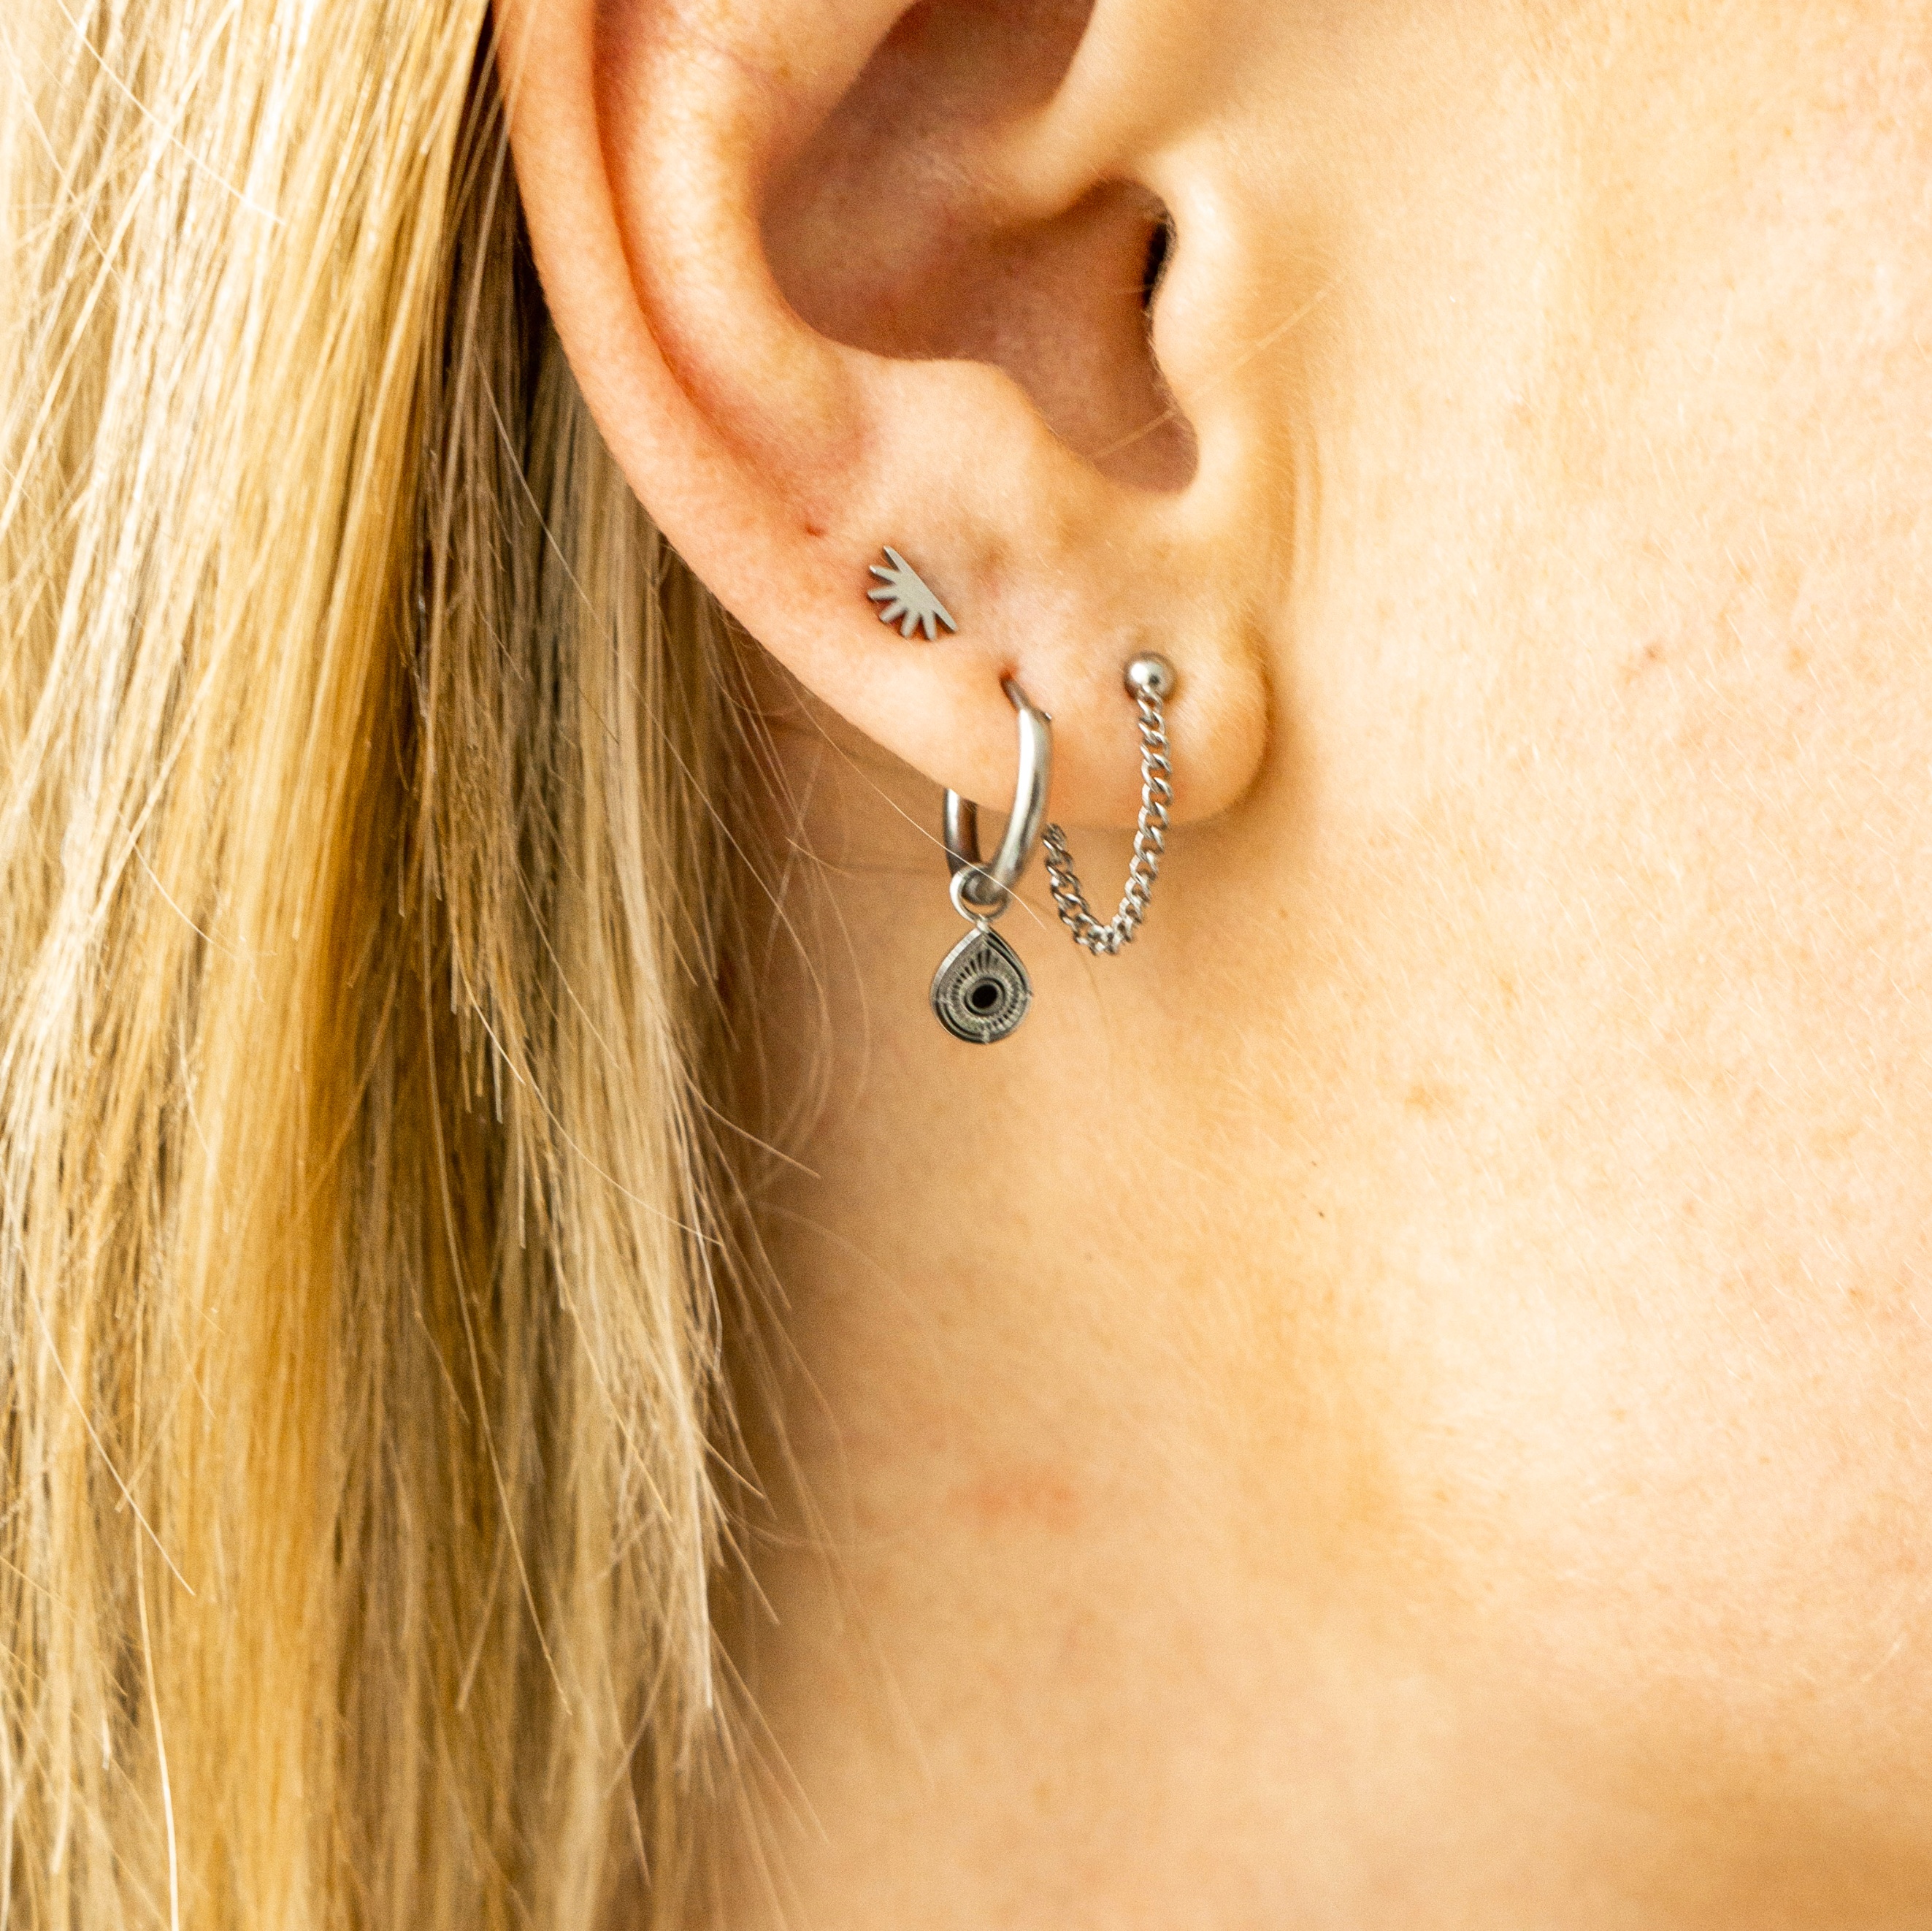 Stud earrings with chain dot